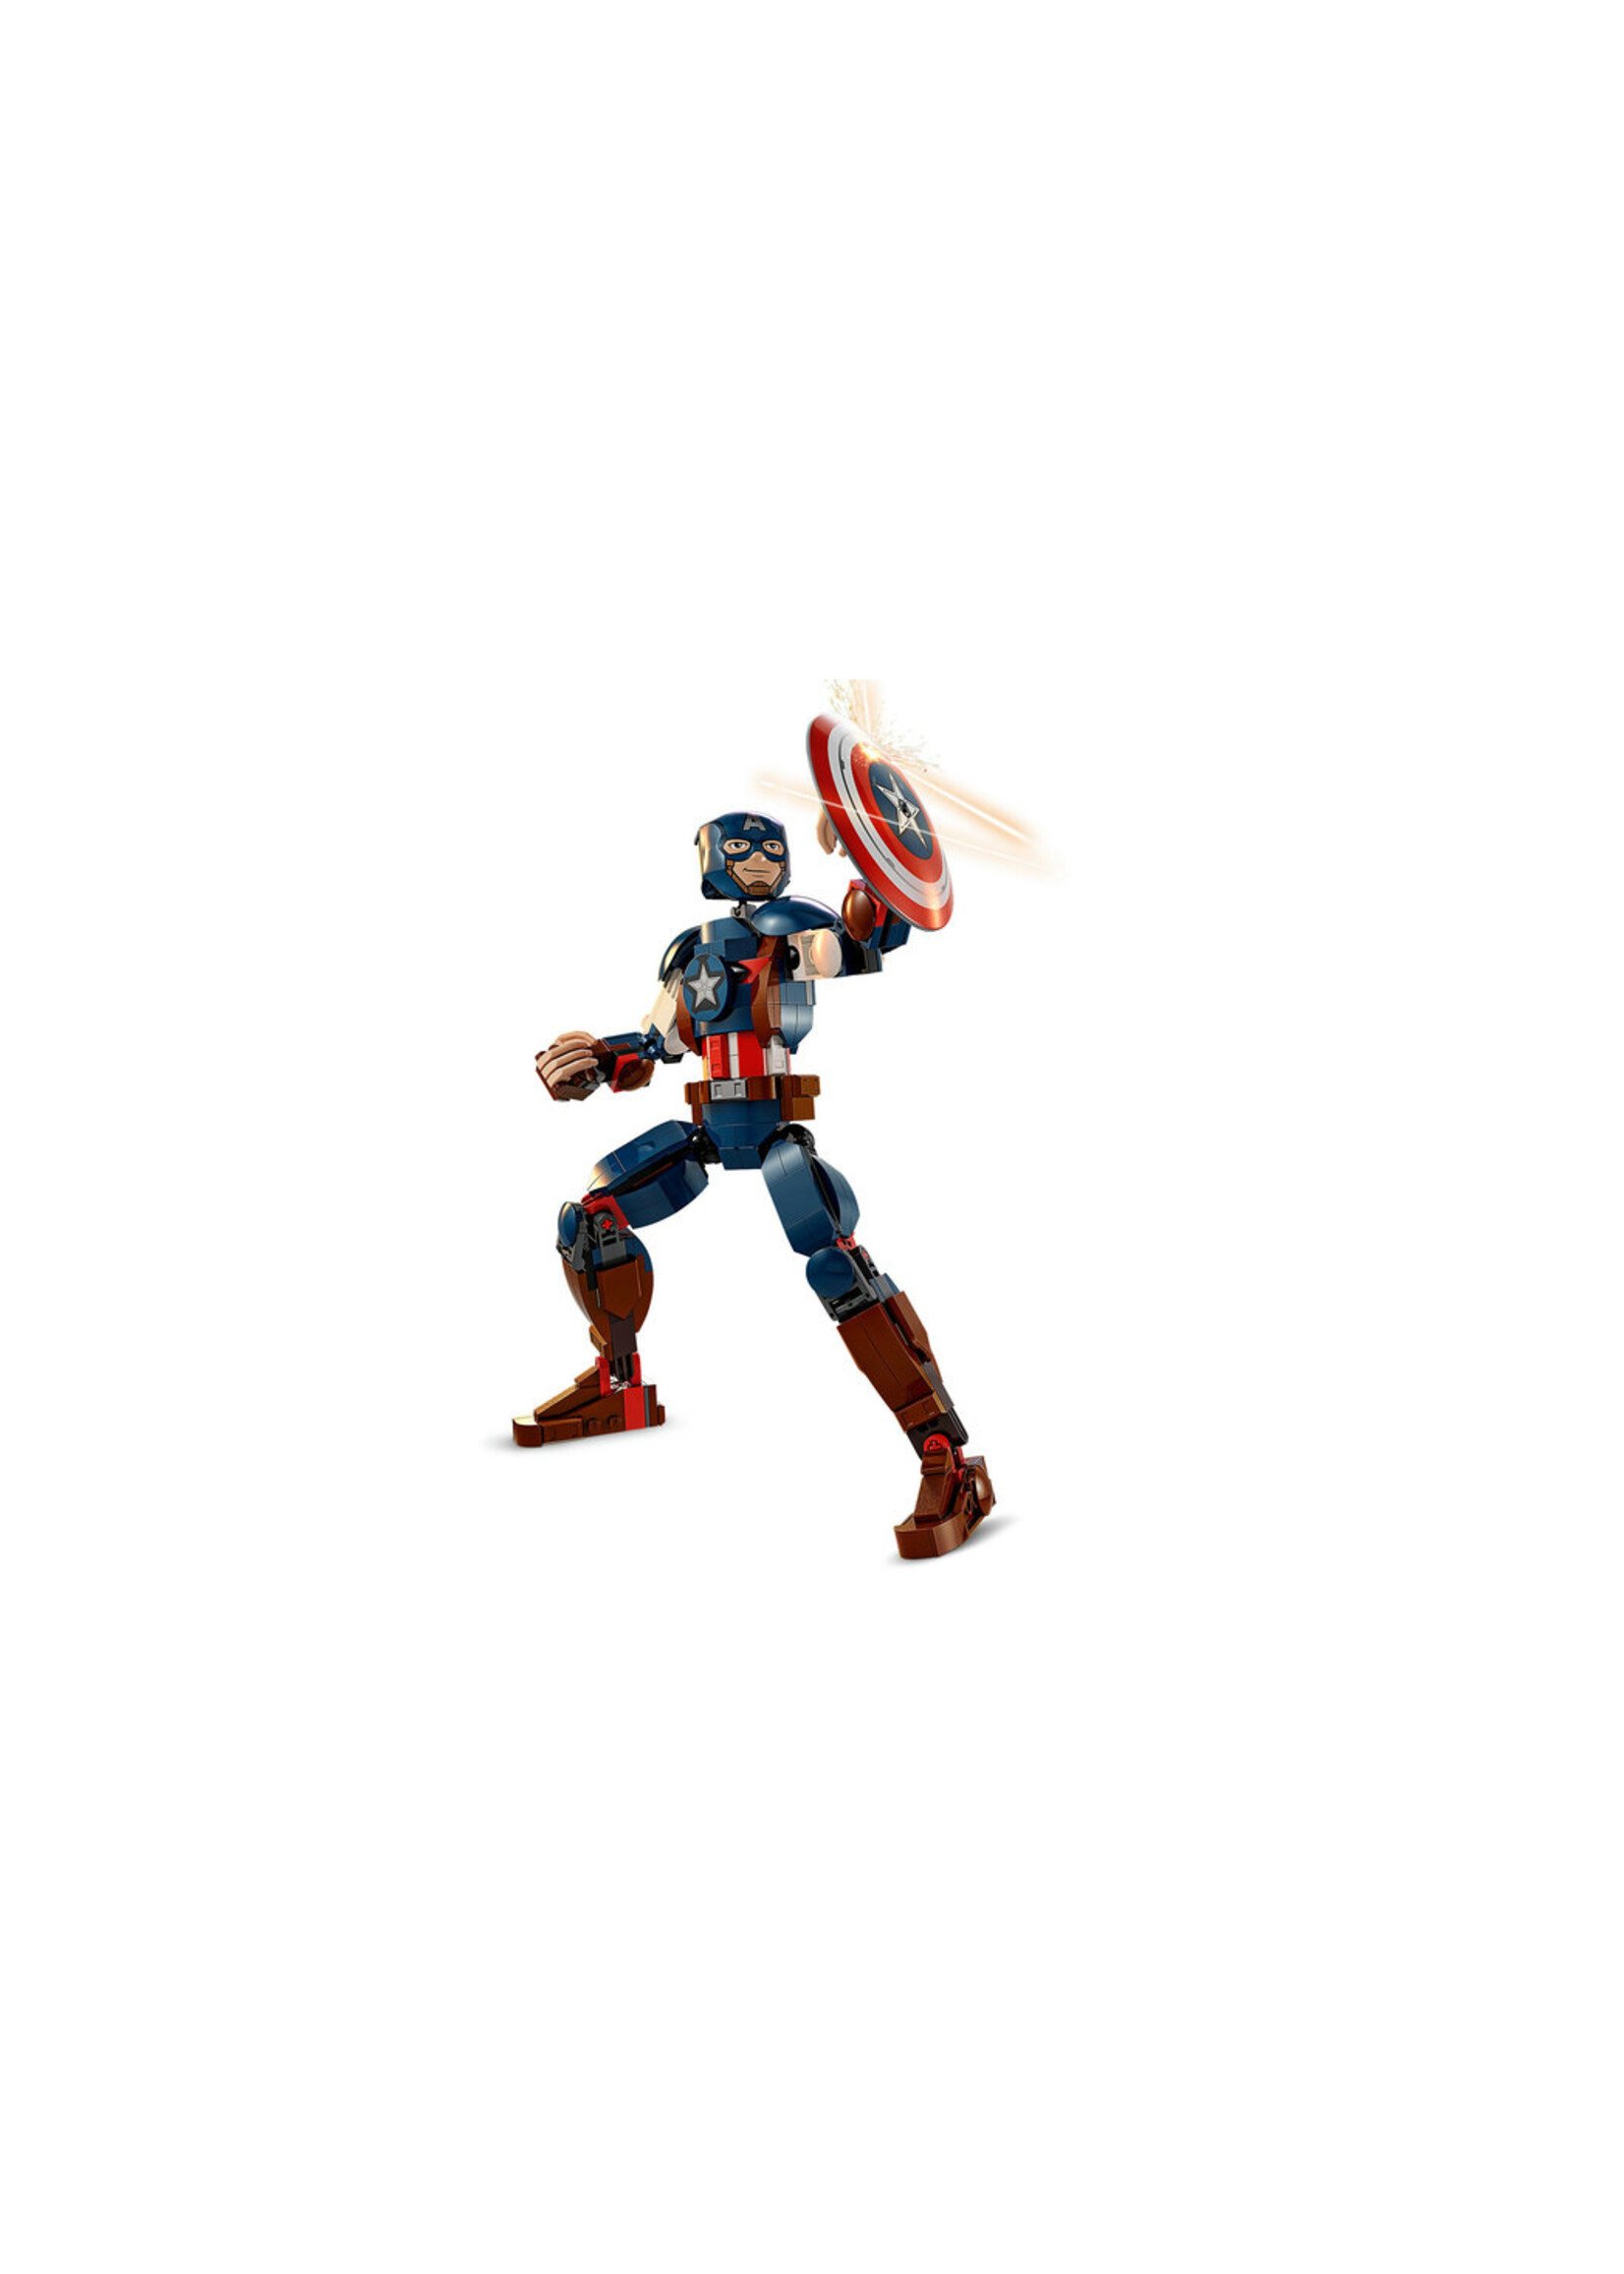 LEGO 76258 - Captain America Construction Figure